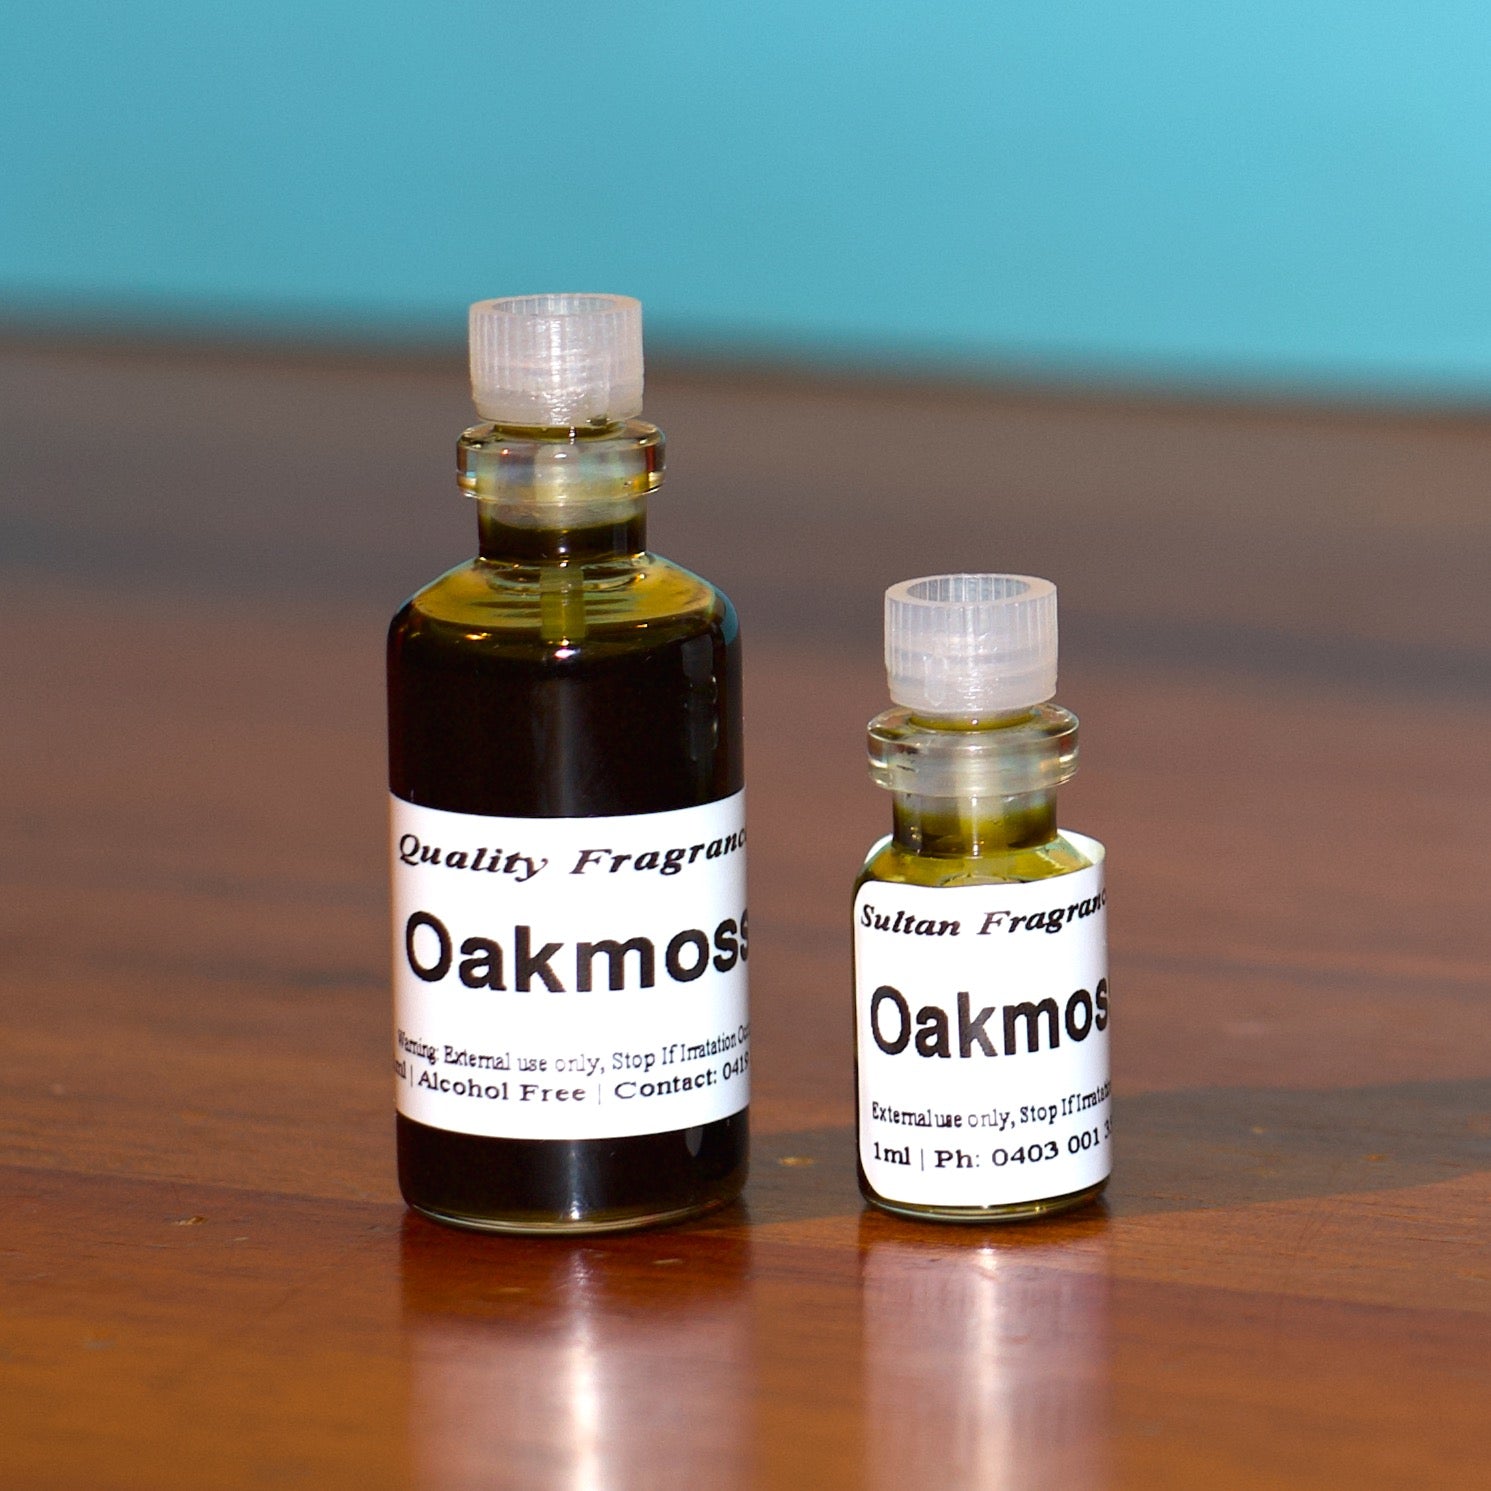 Oakmoss Absolute Essential Oil (Evernia Prunastri). 100% Pure and natural.